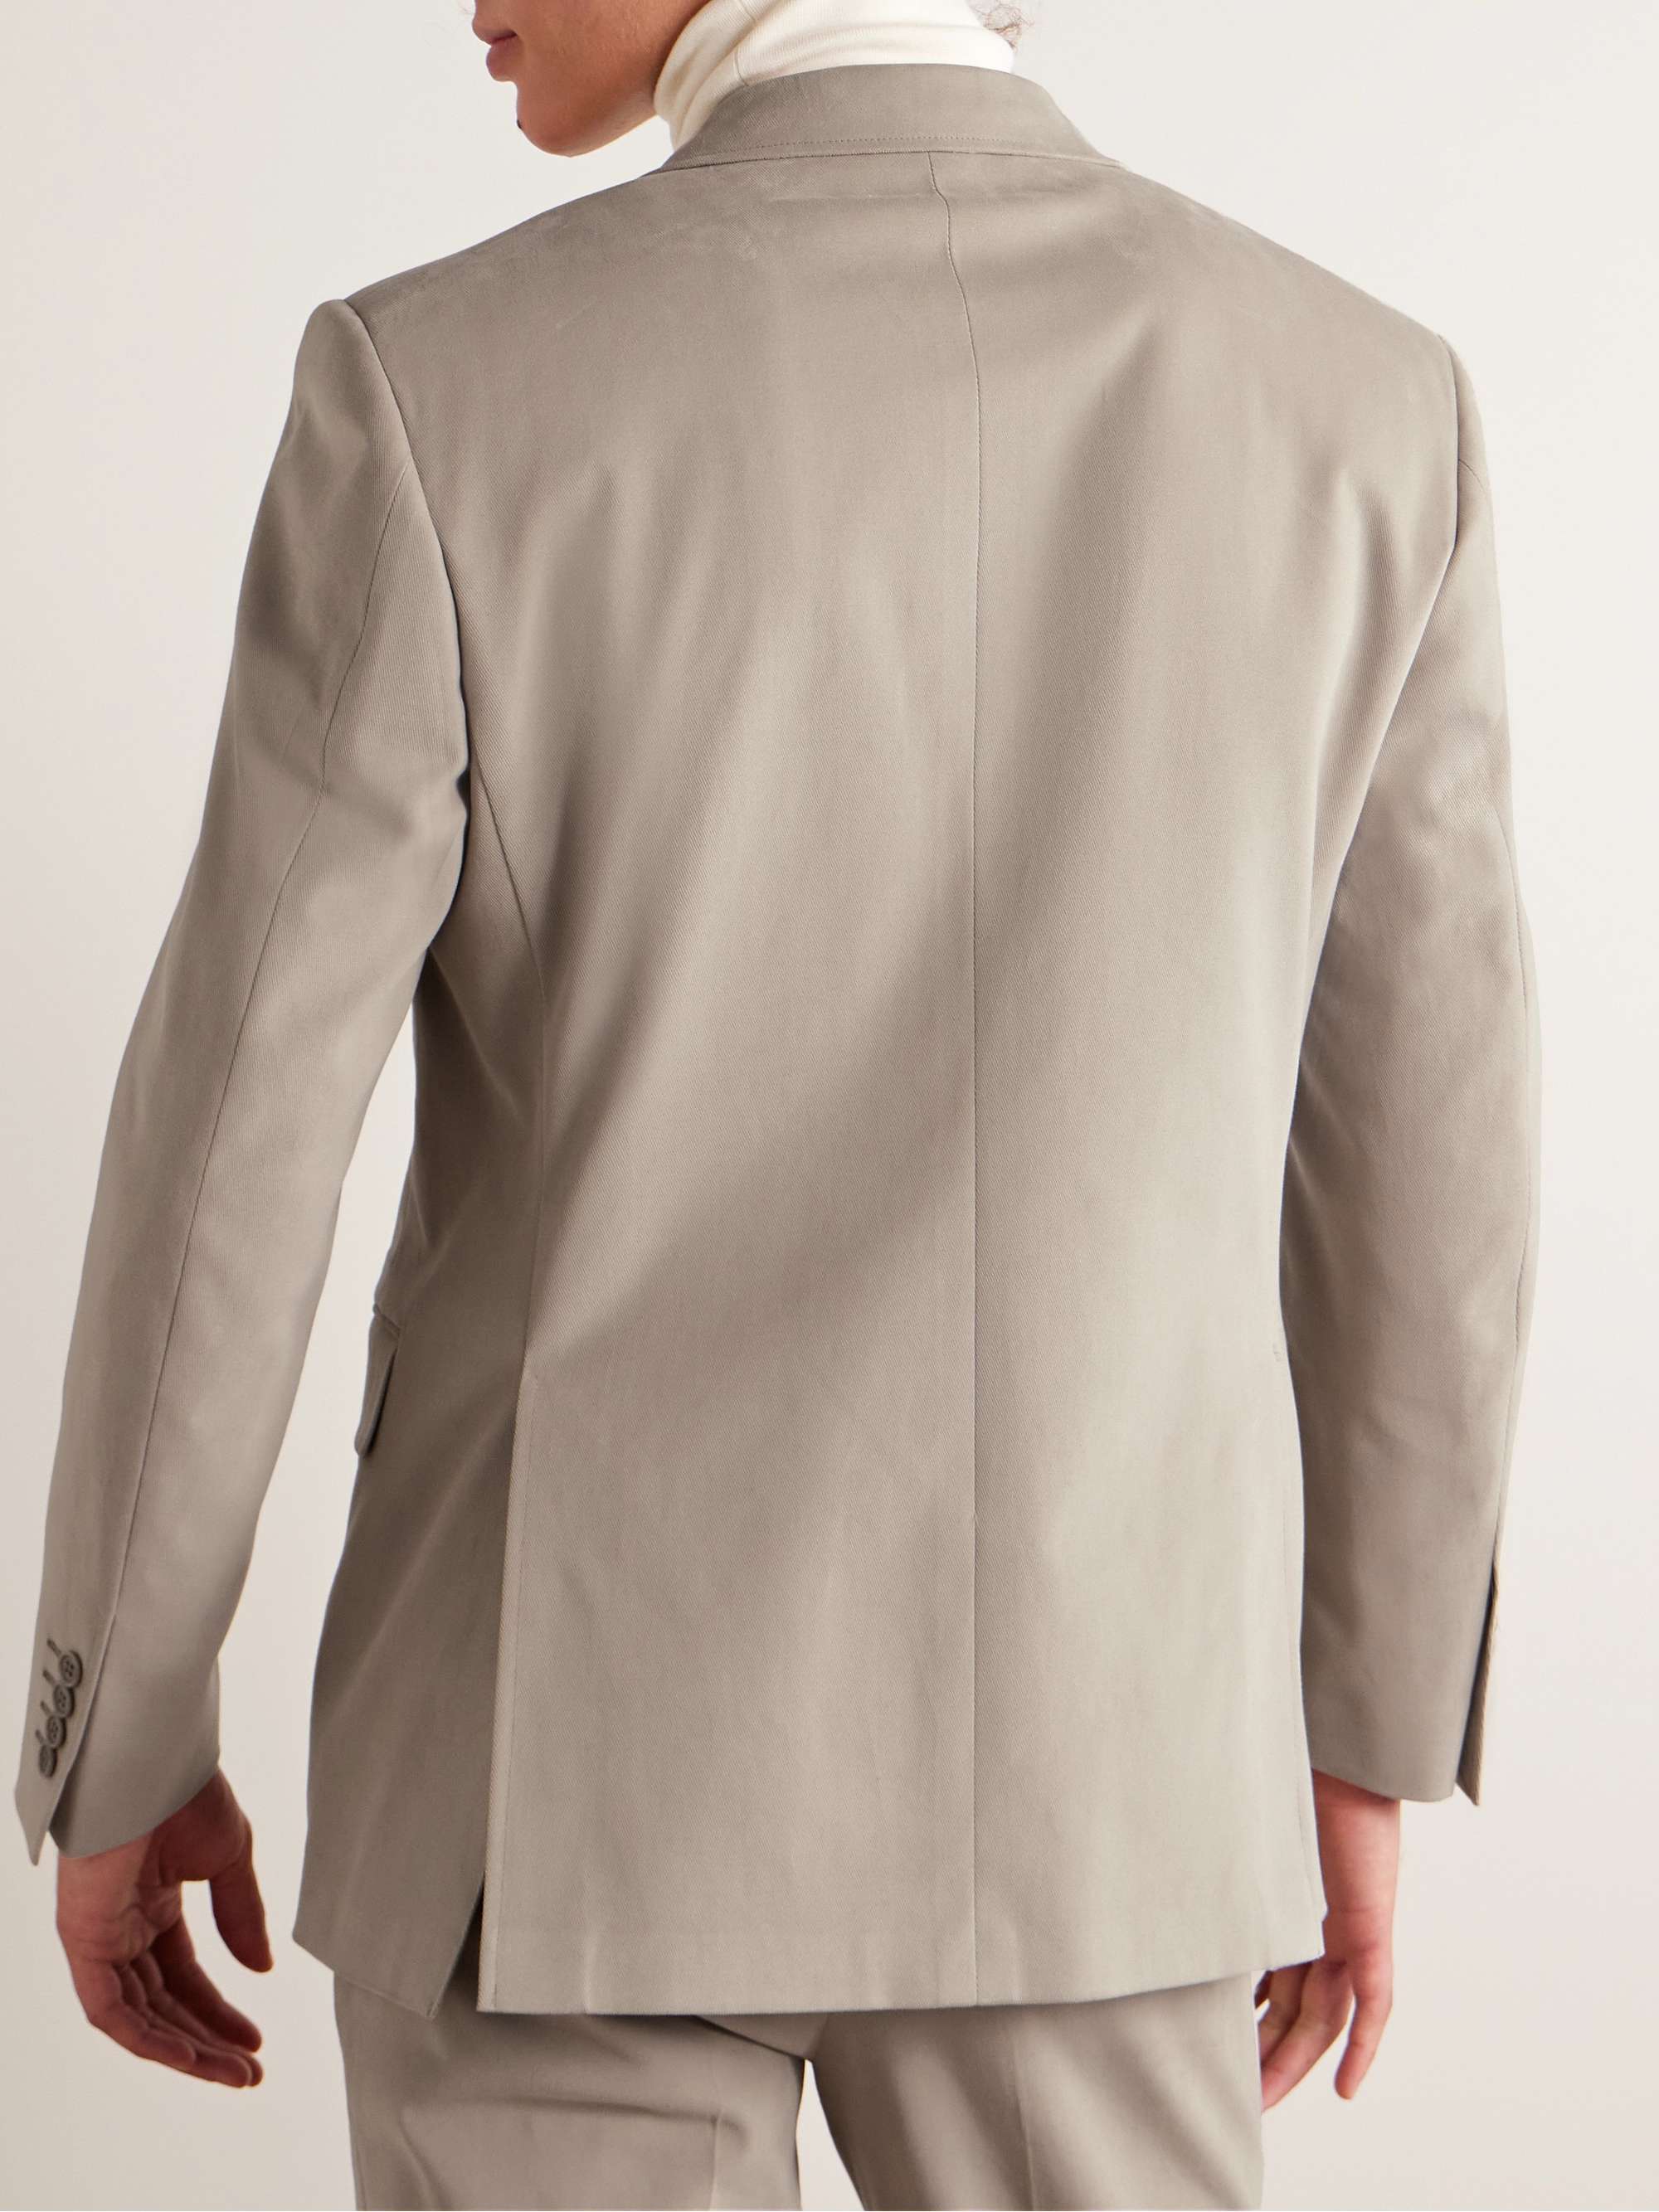 CANALI Cotton-Blend Twill Suit Jacket for Men | MR PORTER